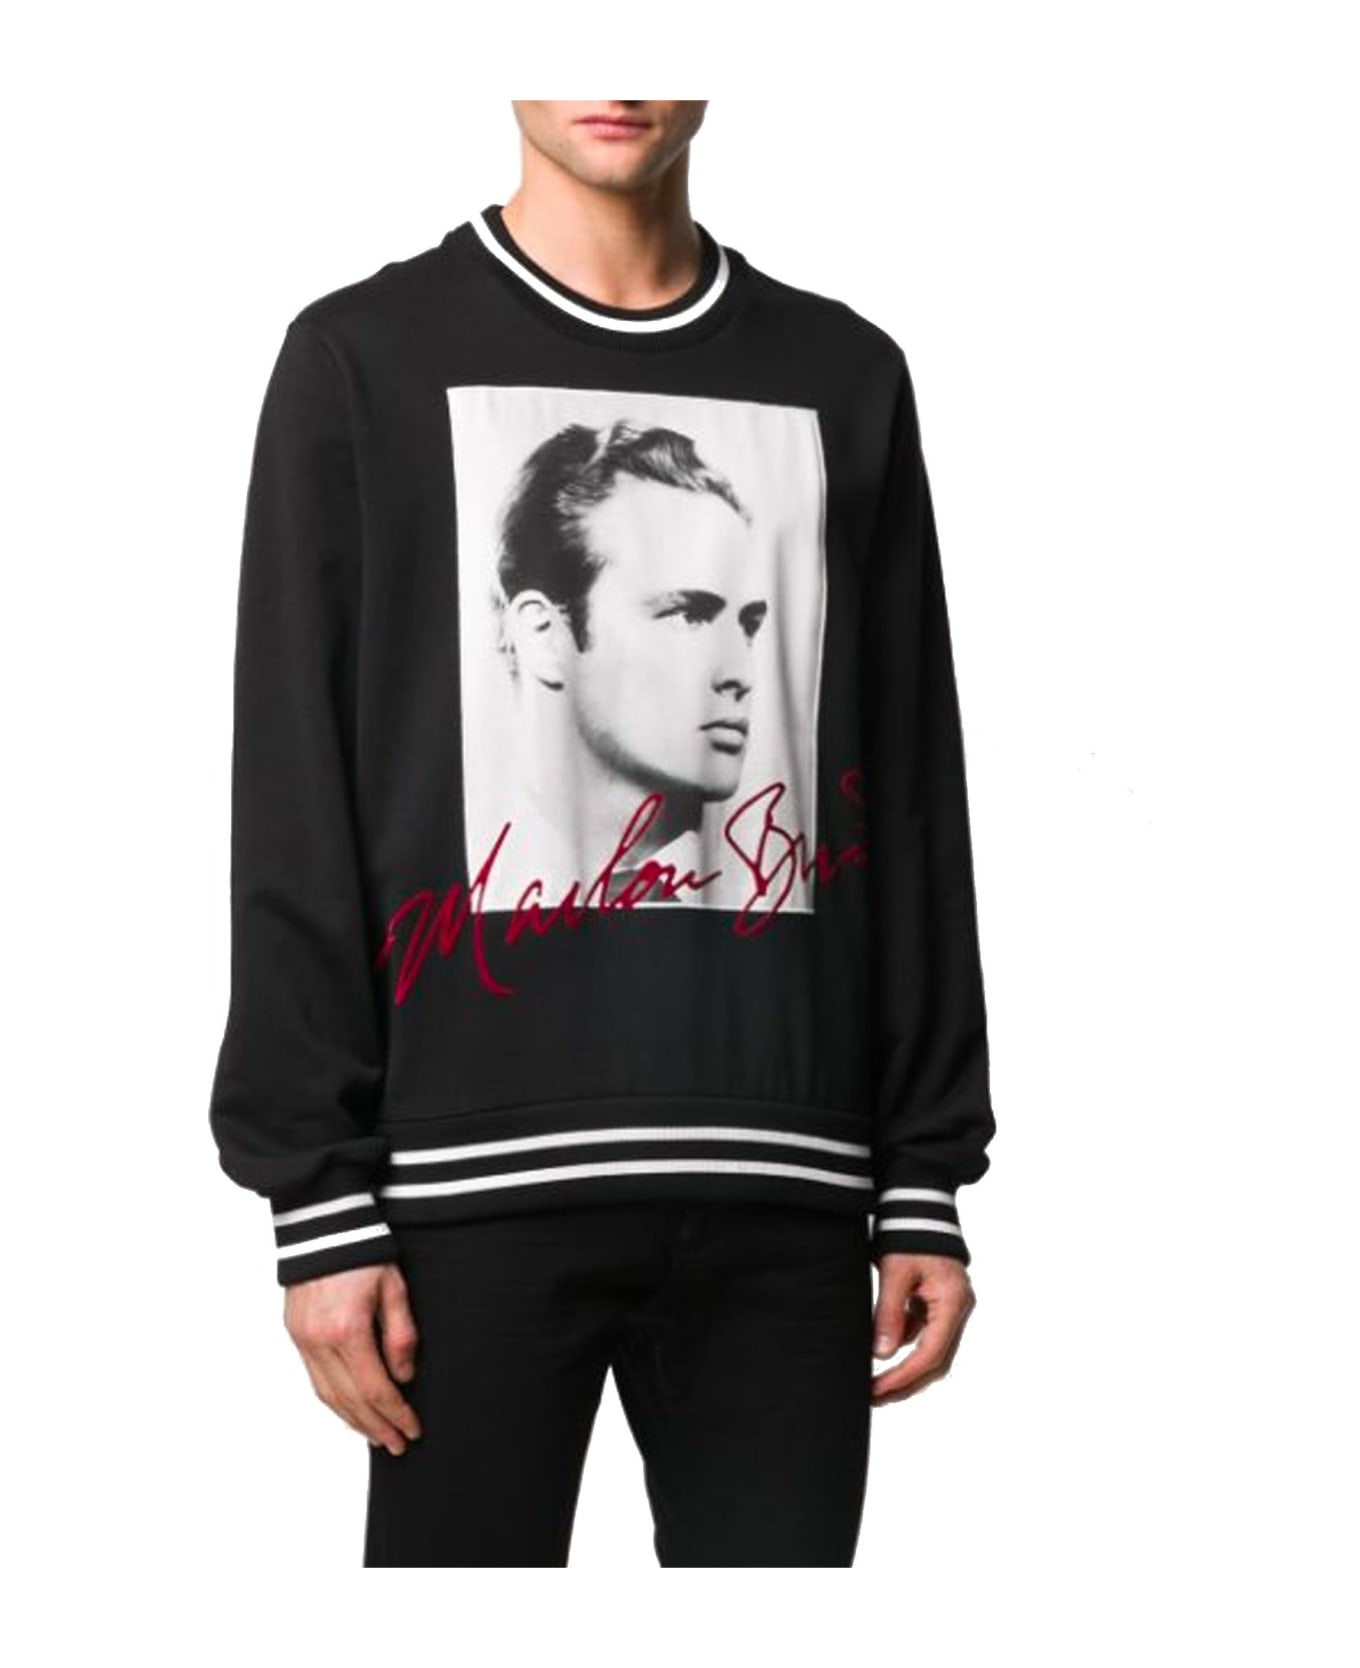 Dolce & Gabbana Marlon Brando Sweatshirt - Black フリース